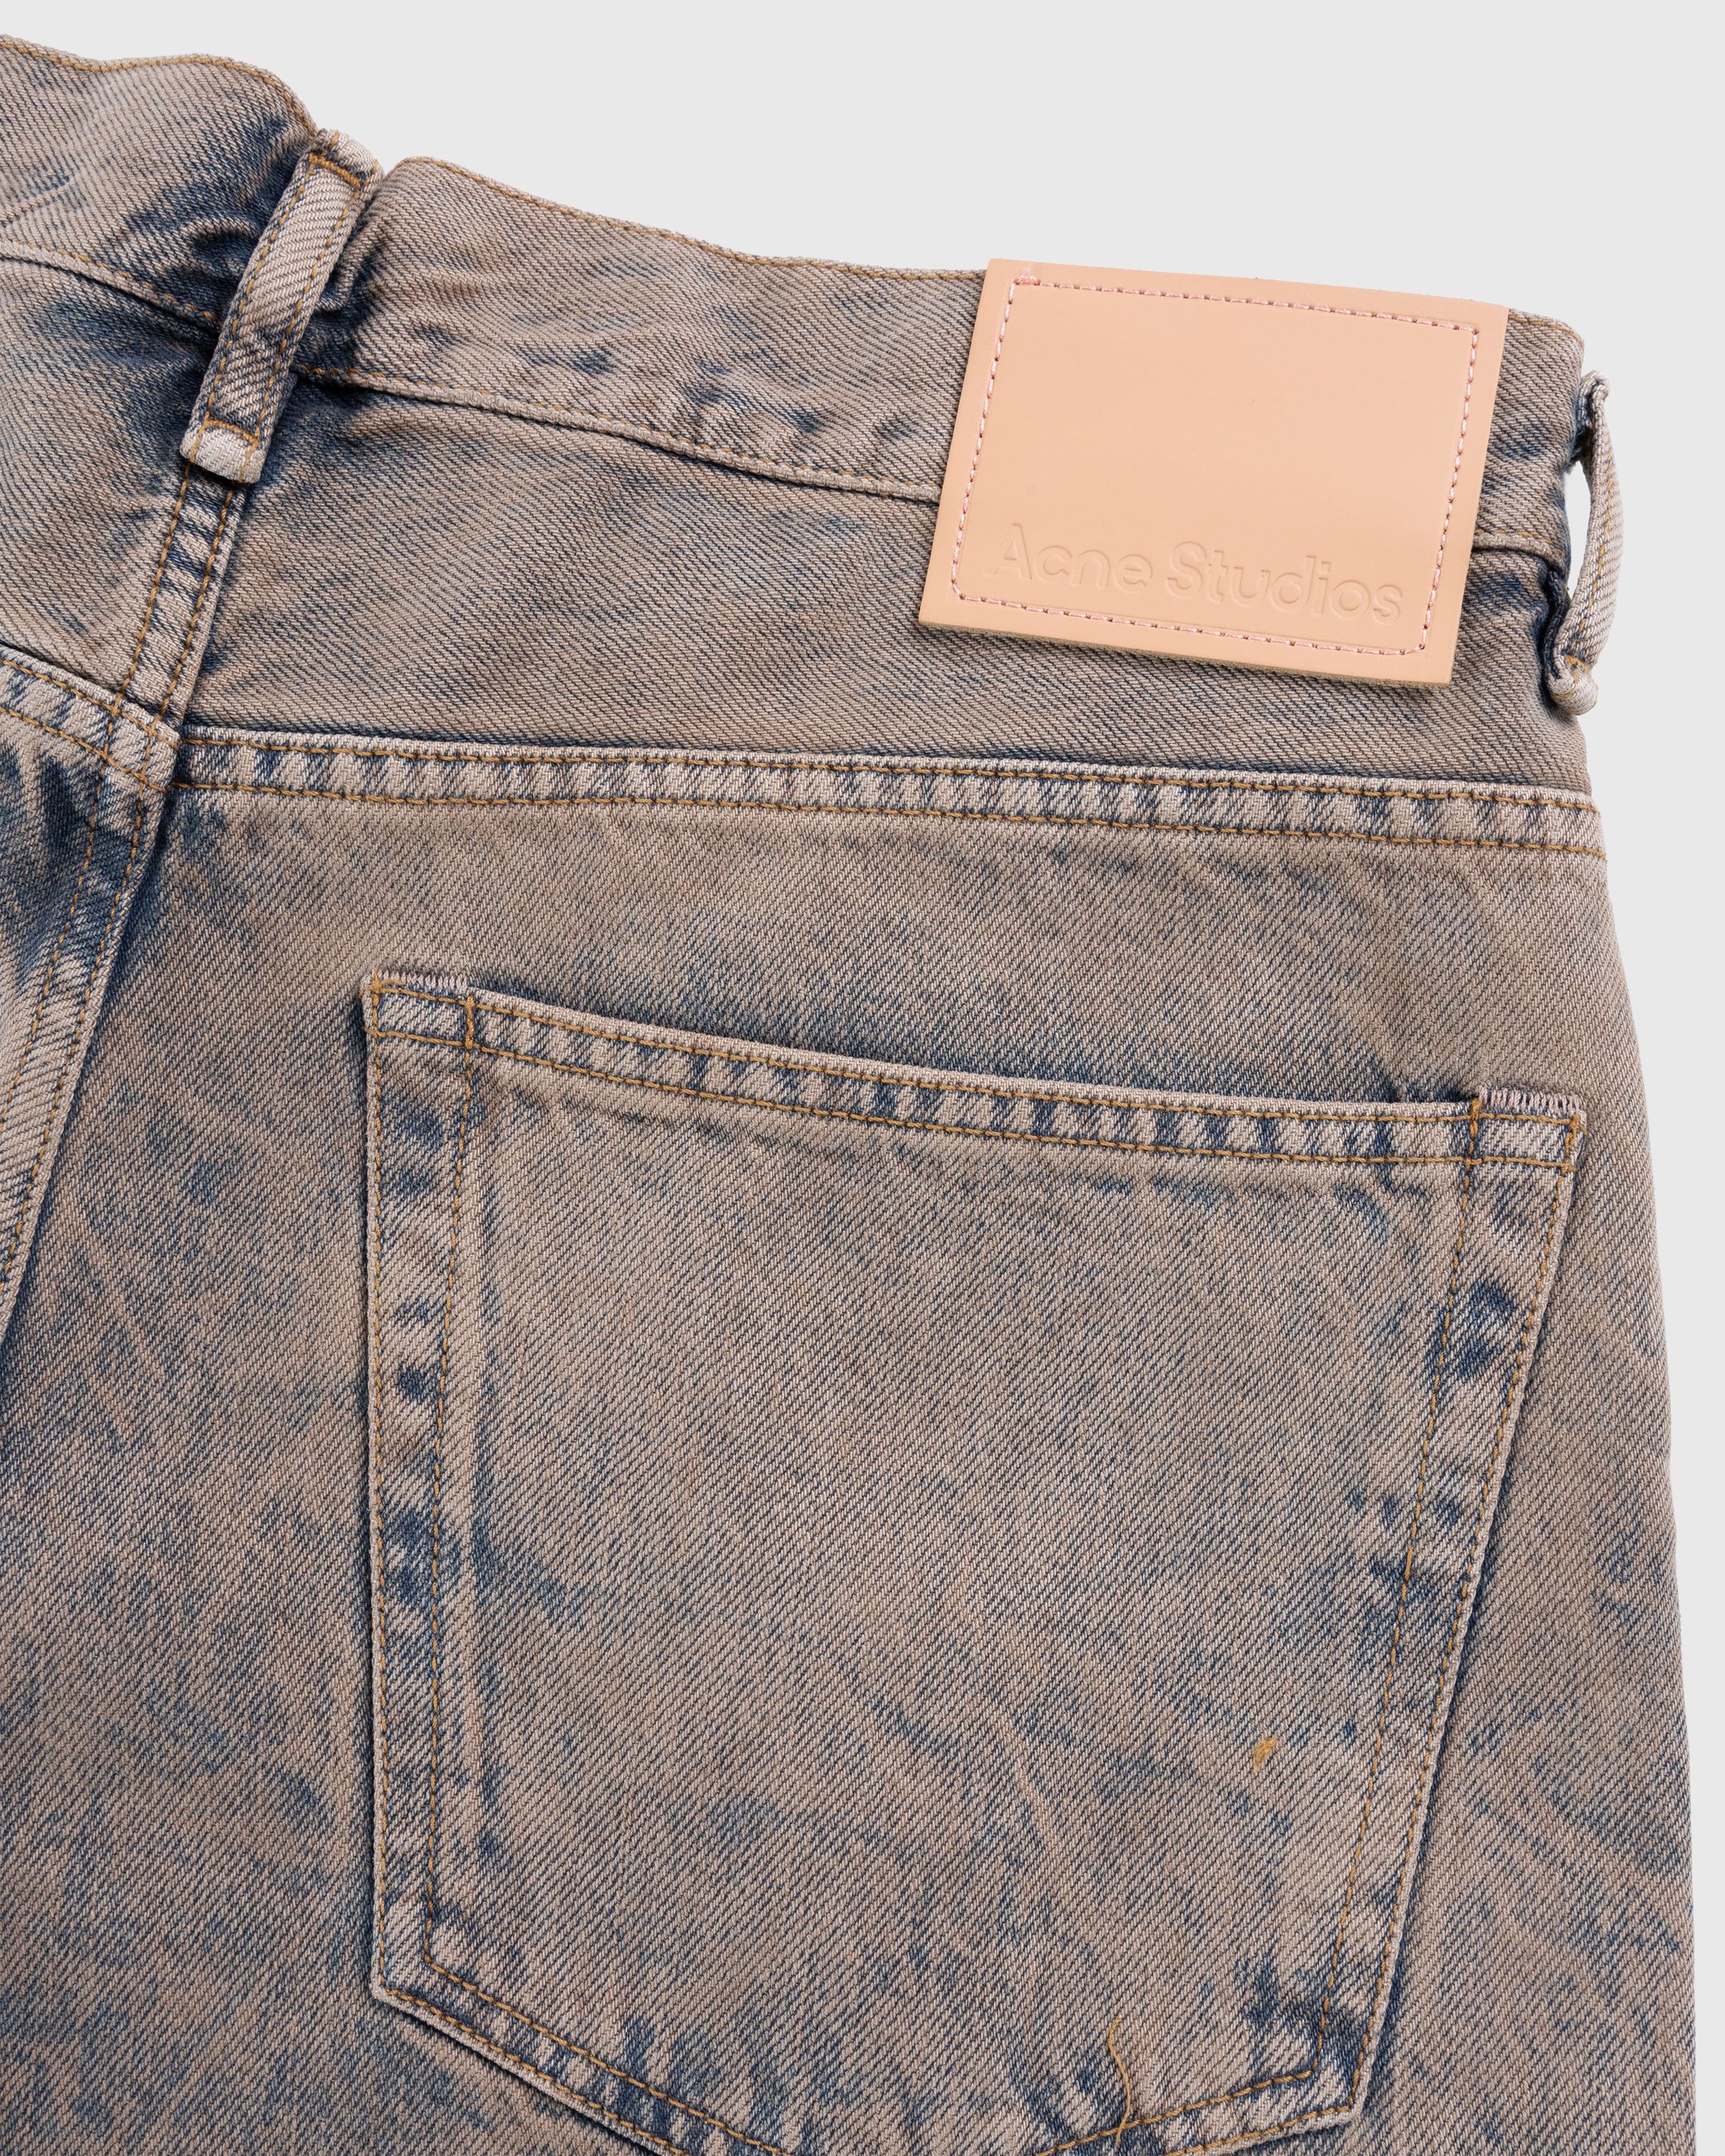 Acne Studios - Loose Fit Denim Shorts Light Pink/Grey - Clothing - Multi - Image 6